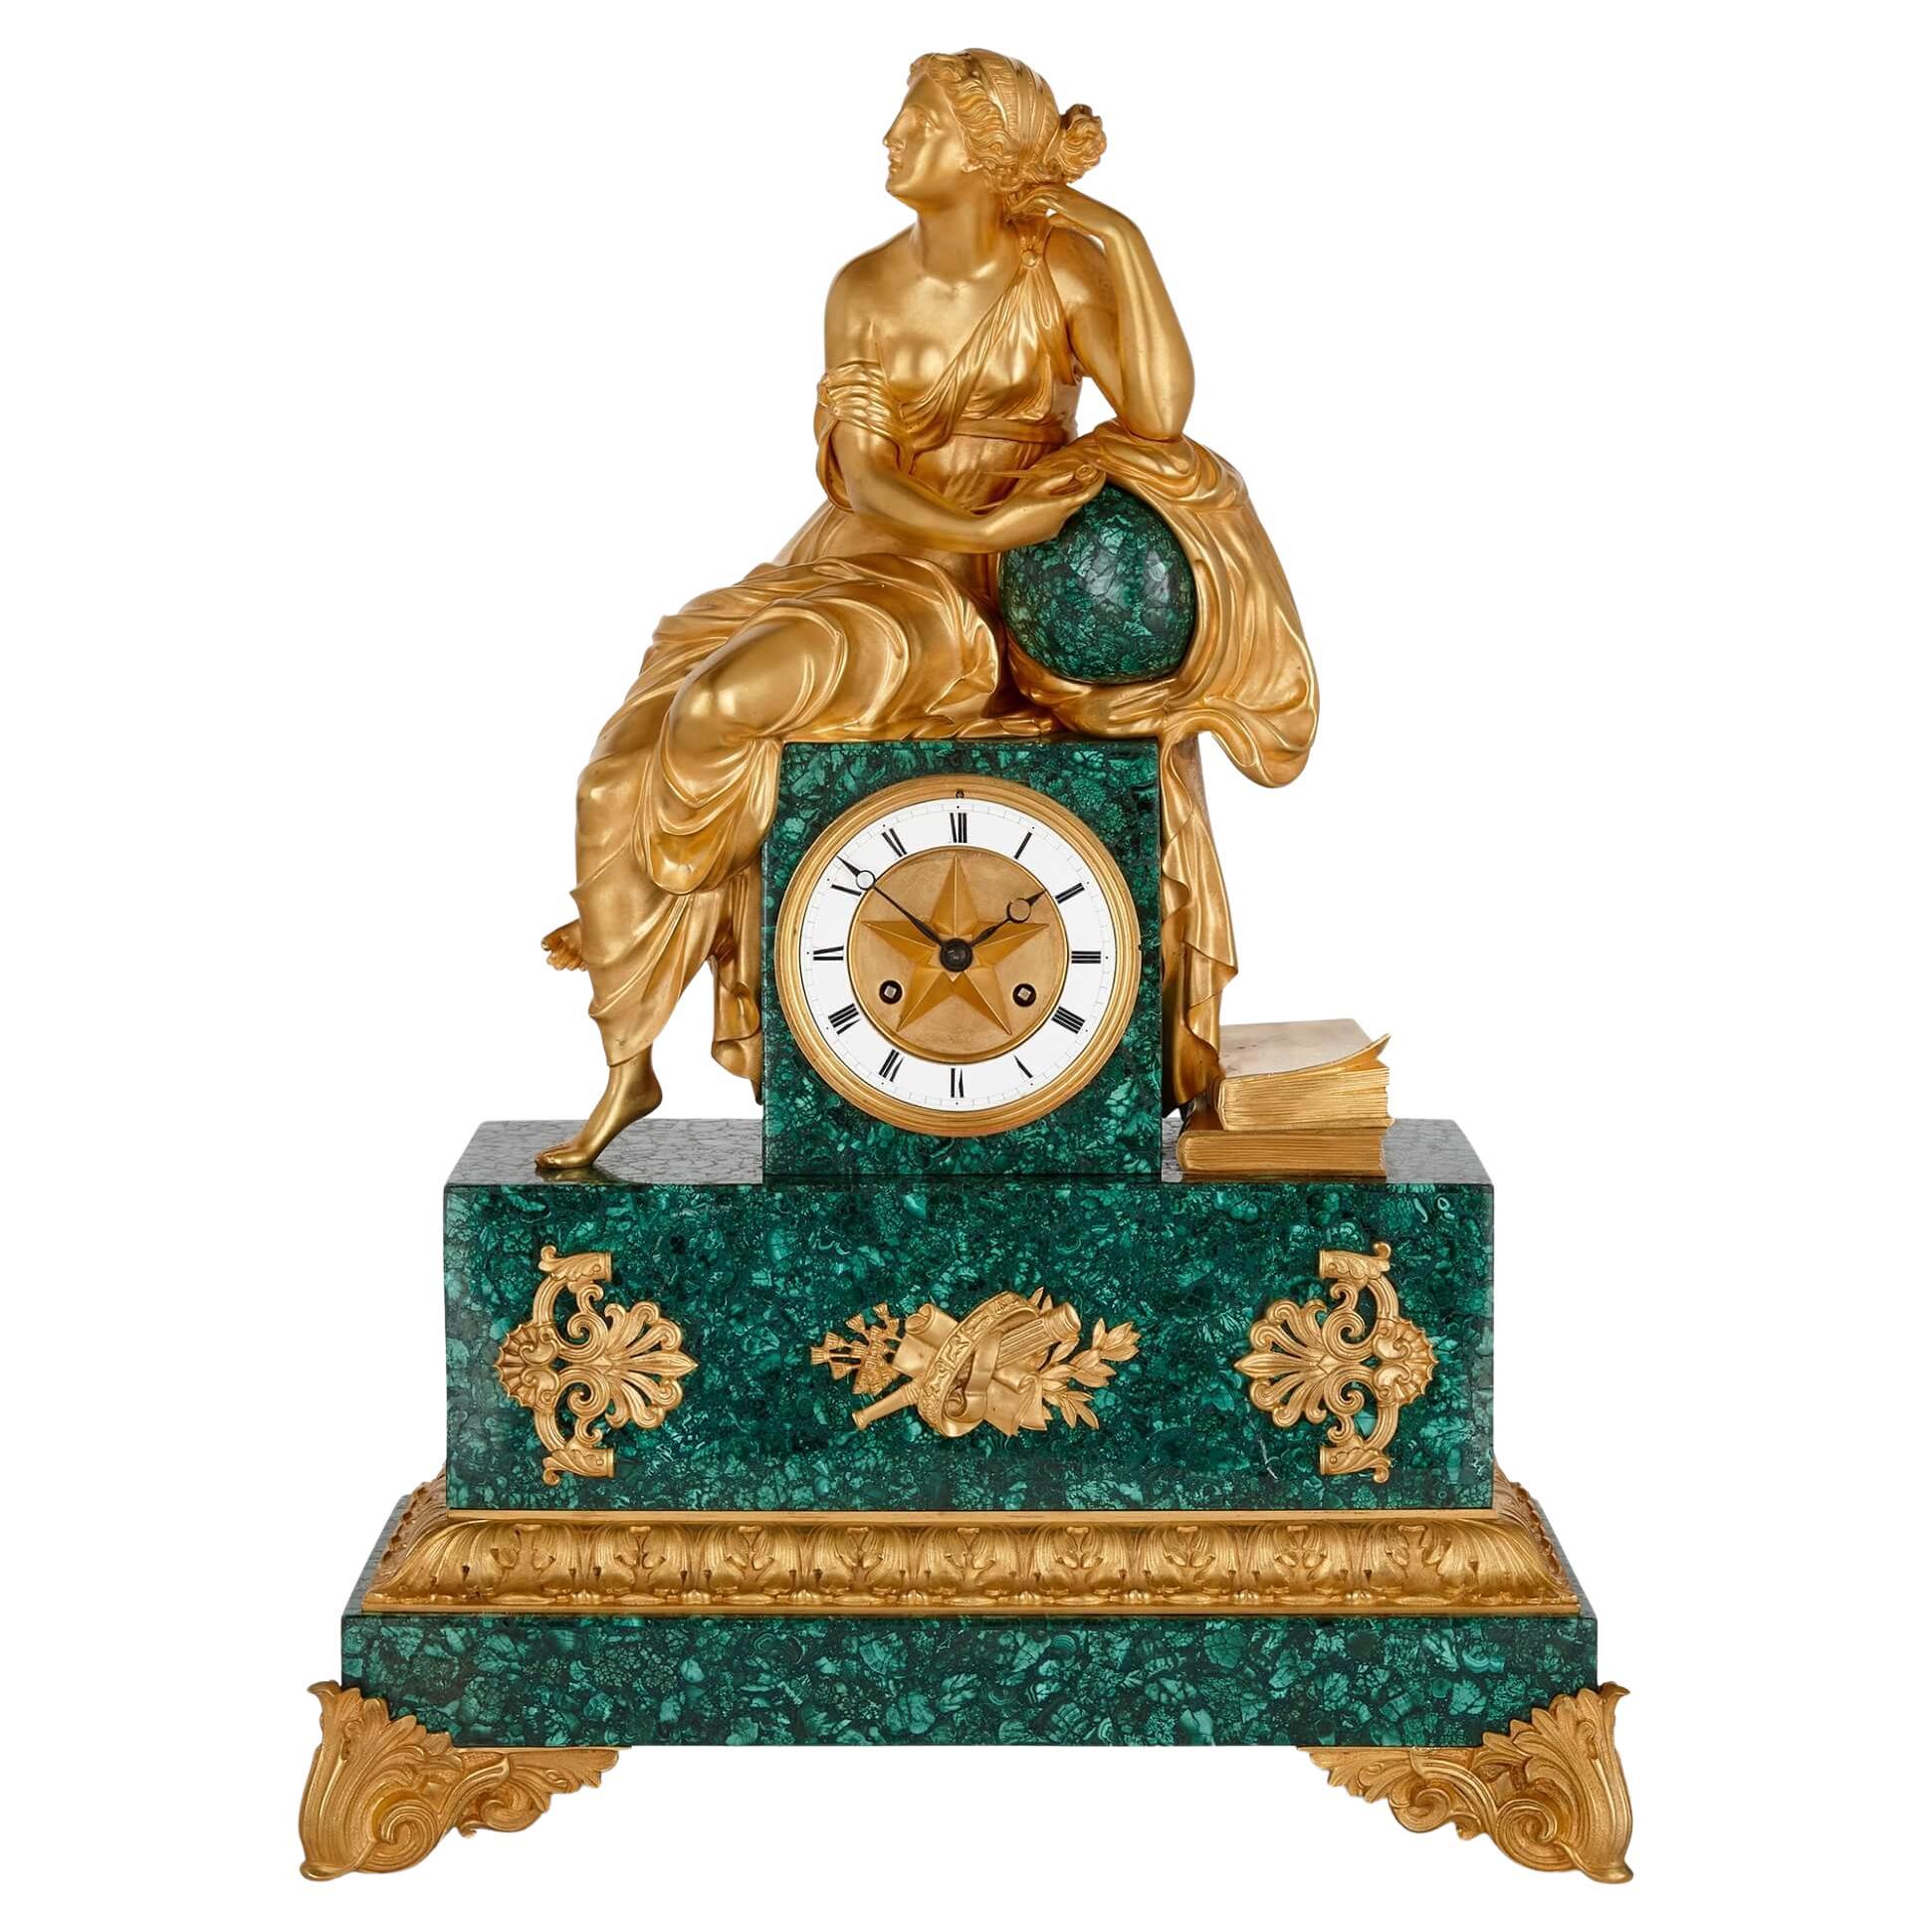 Charles X Period Gilt-Bronze and Malachite Sculptural Mantel Clock